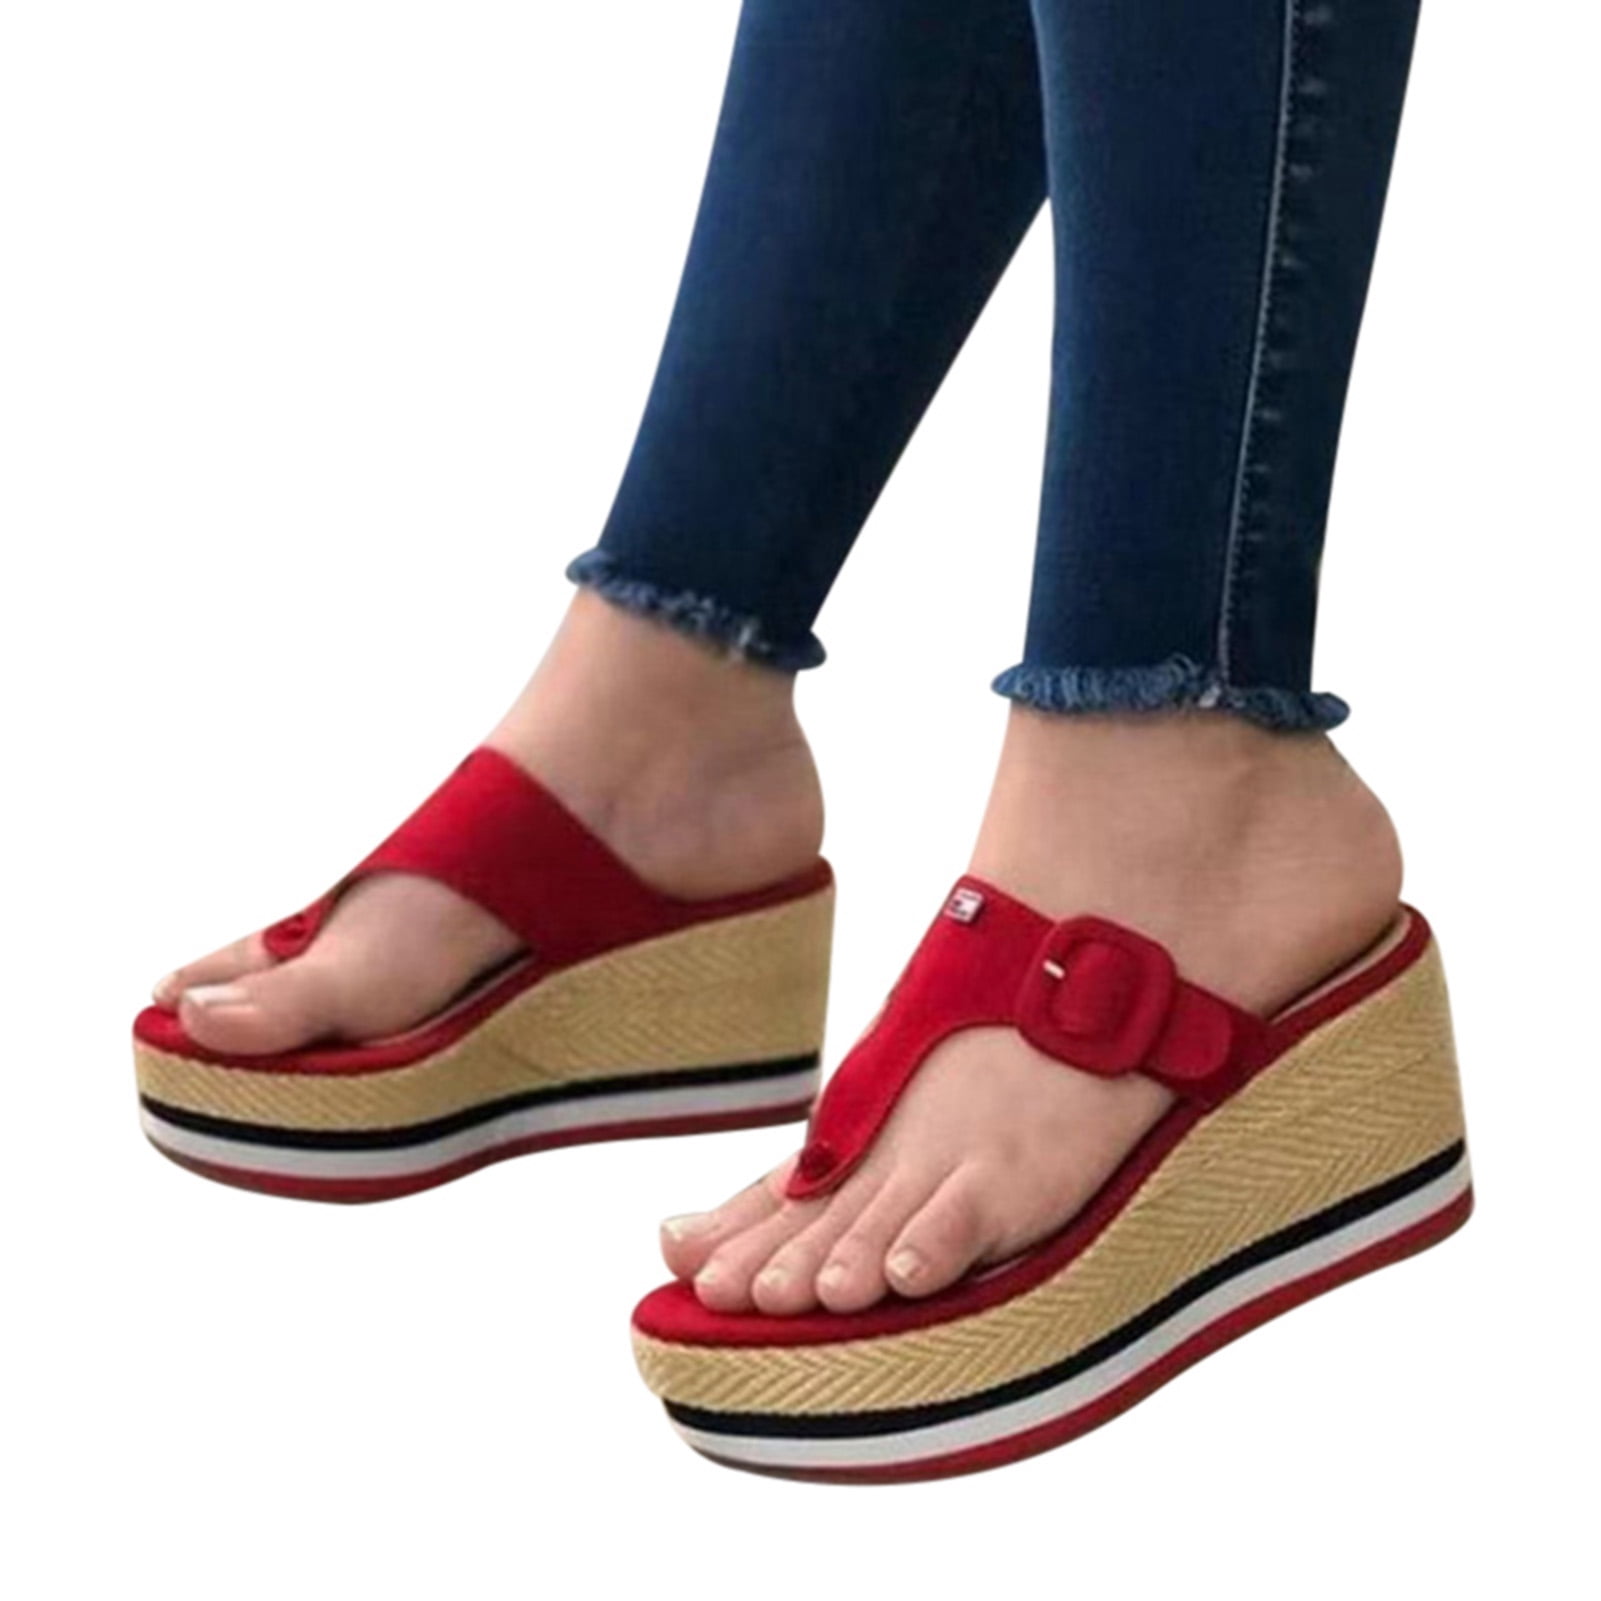 Details about   Womens Lady Wedge Heel Slide Slippers Platform Flip Flops Sandals Shoes Size 